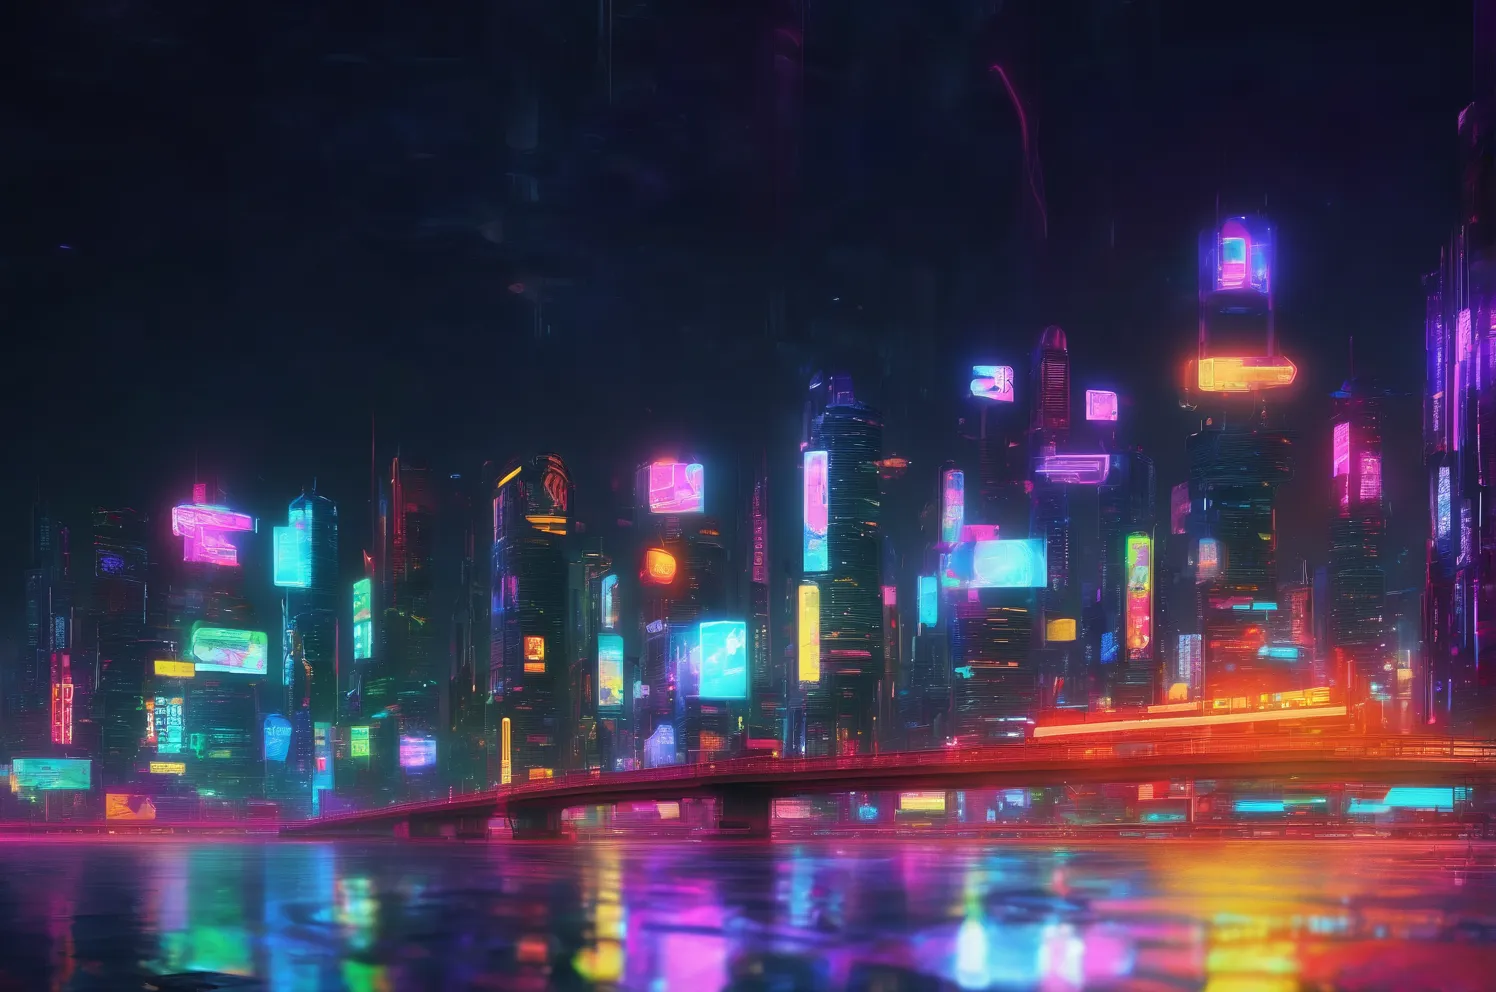 A cyberpunk cityscape created with Stylize